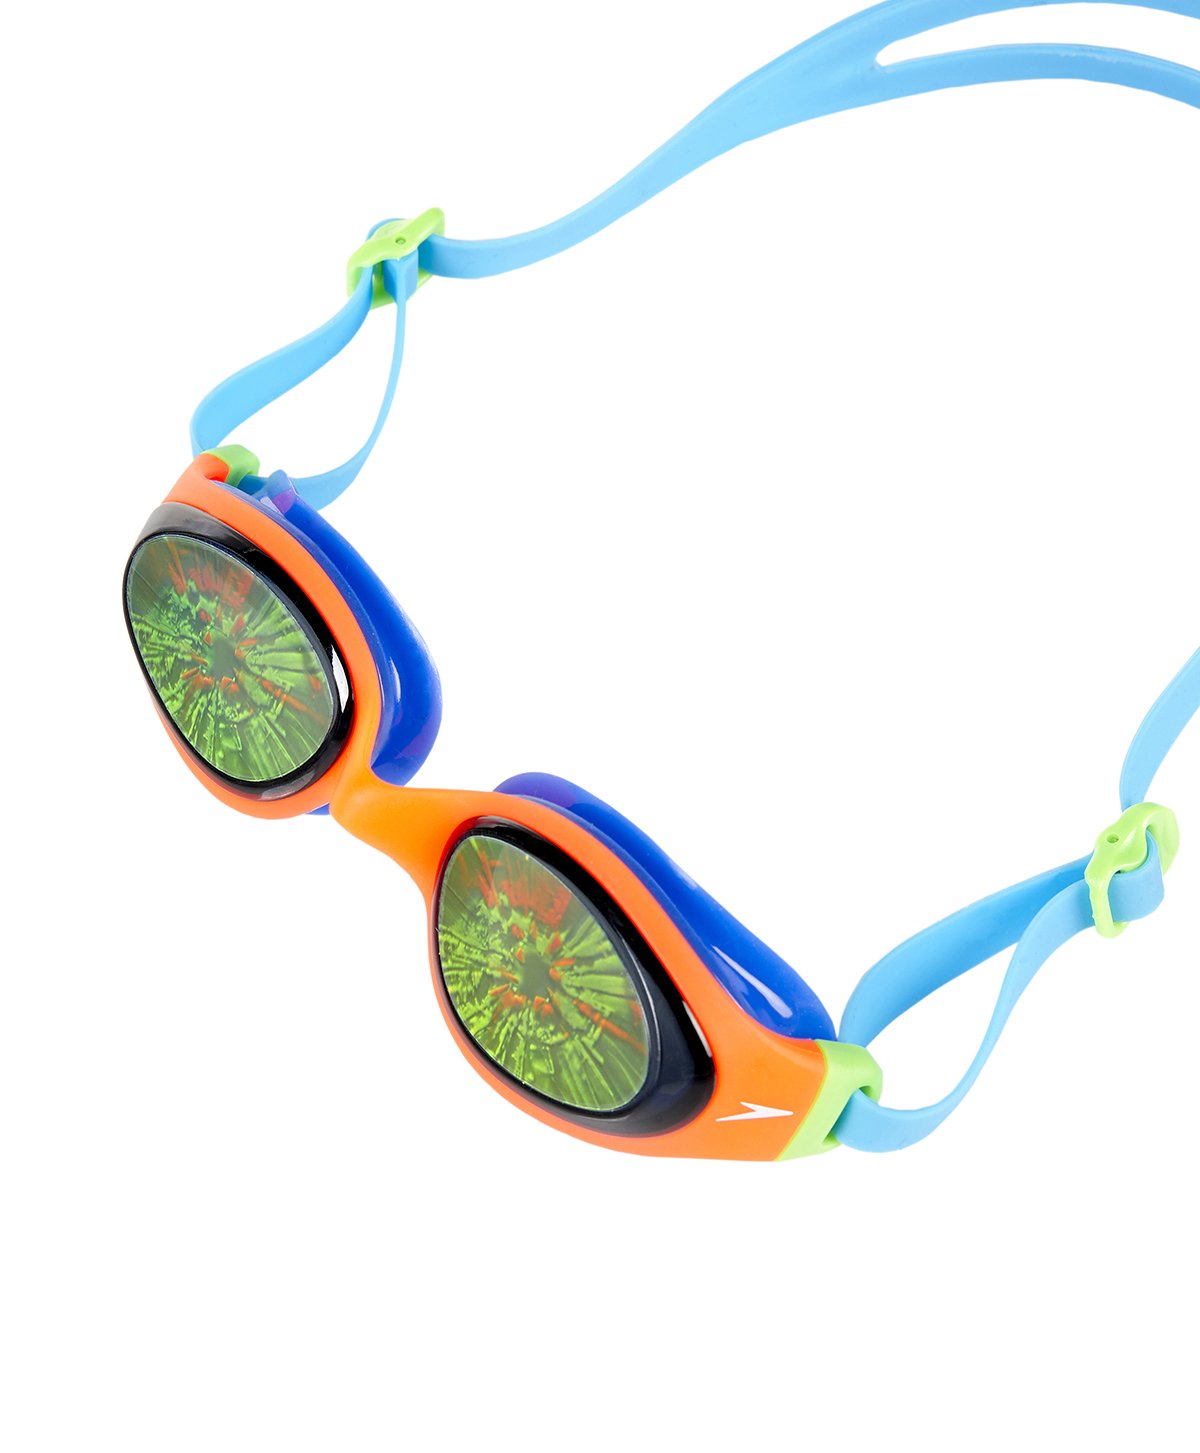 Speedo Hollowonder Swimming Goggles, Youth Free Size (Smoke/Red) - Best Price online Prokicksports.com